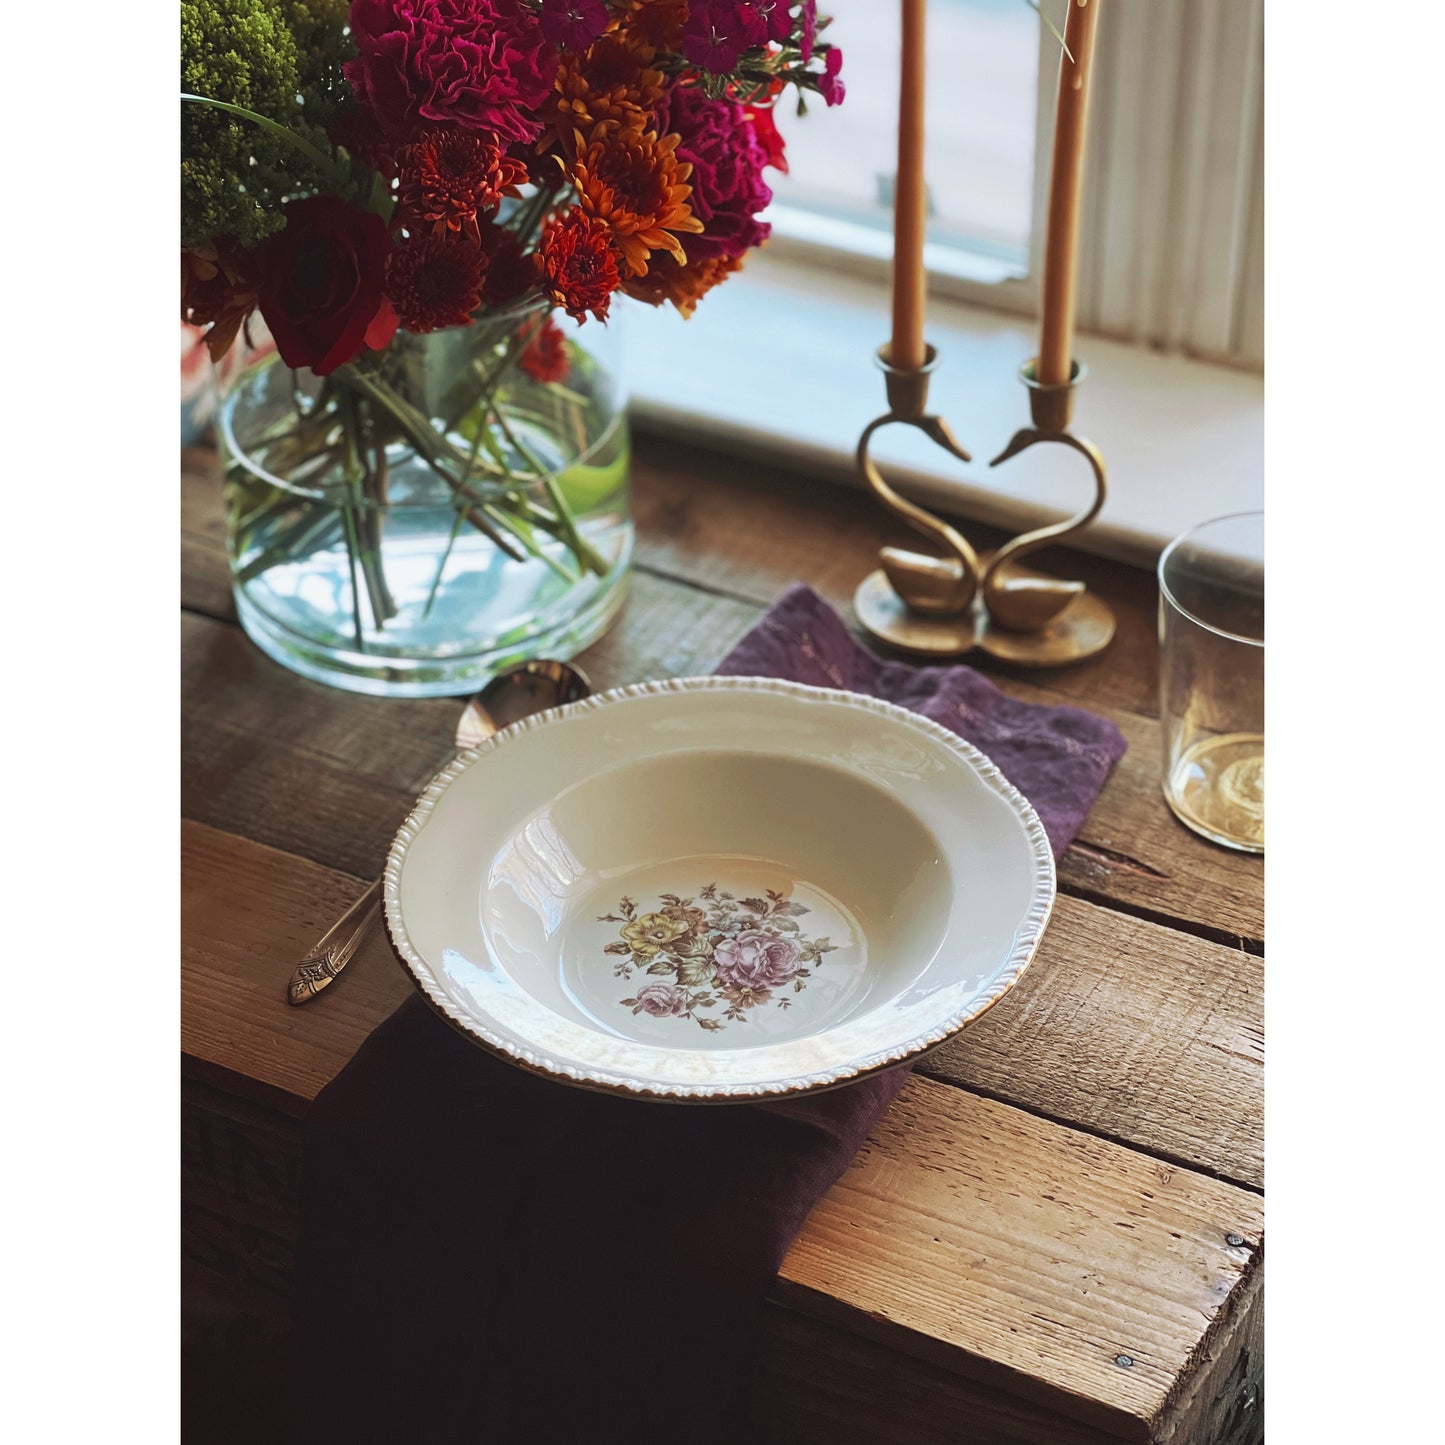 Cunningham Pickett floral soup bowls